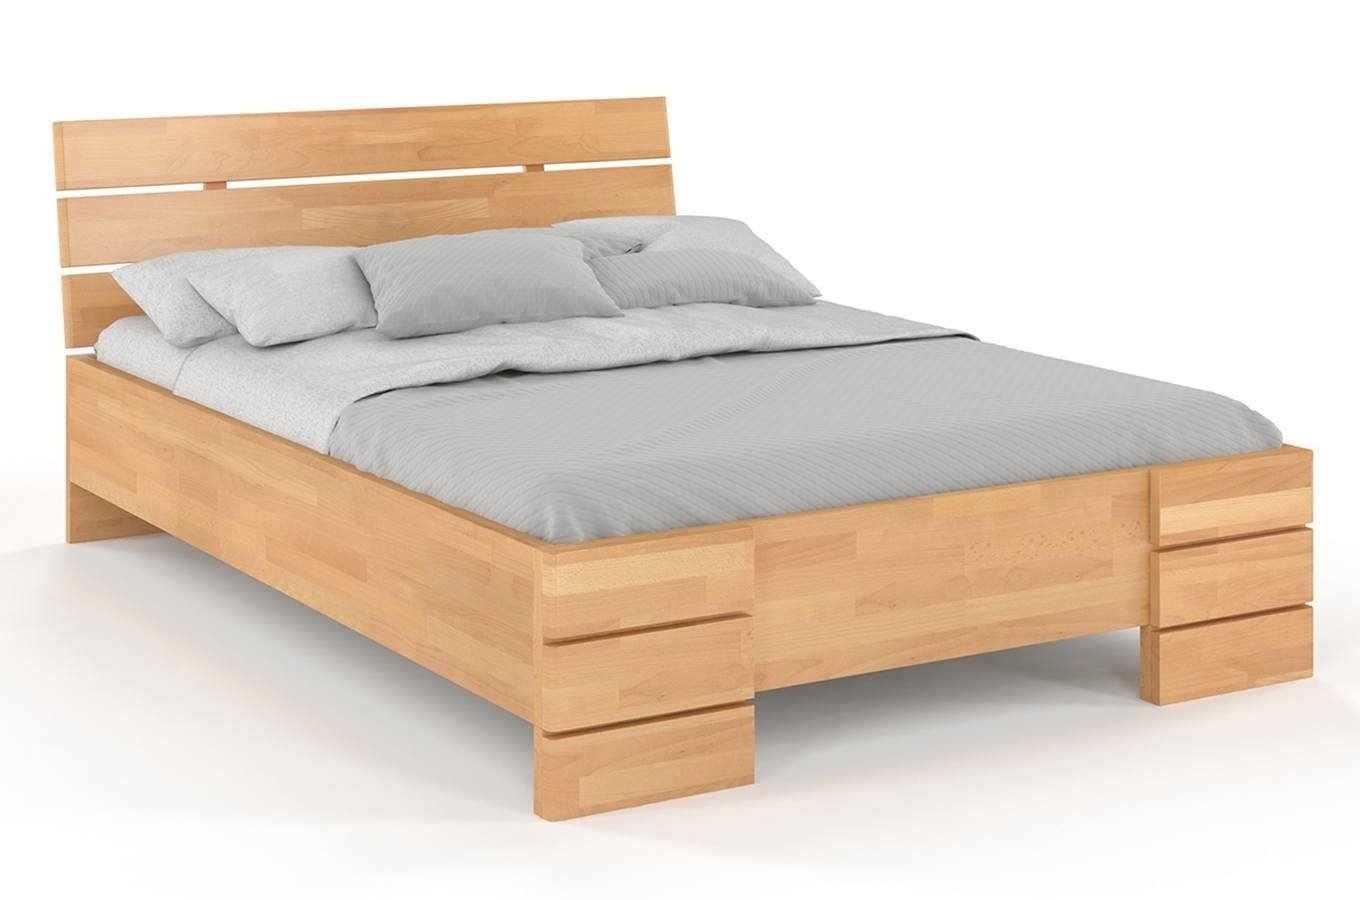 Łóżko drewniane bukowe Visby SANDEMO High BC Long (Skrzynia na pościel) / 120x220 cm, kolor natrualny